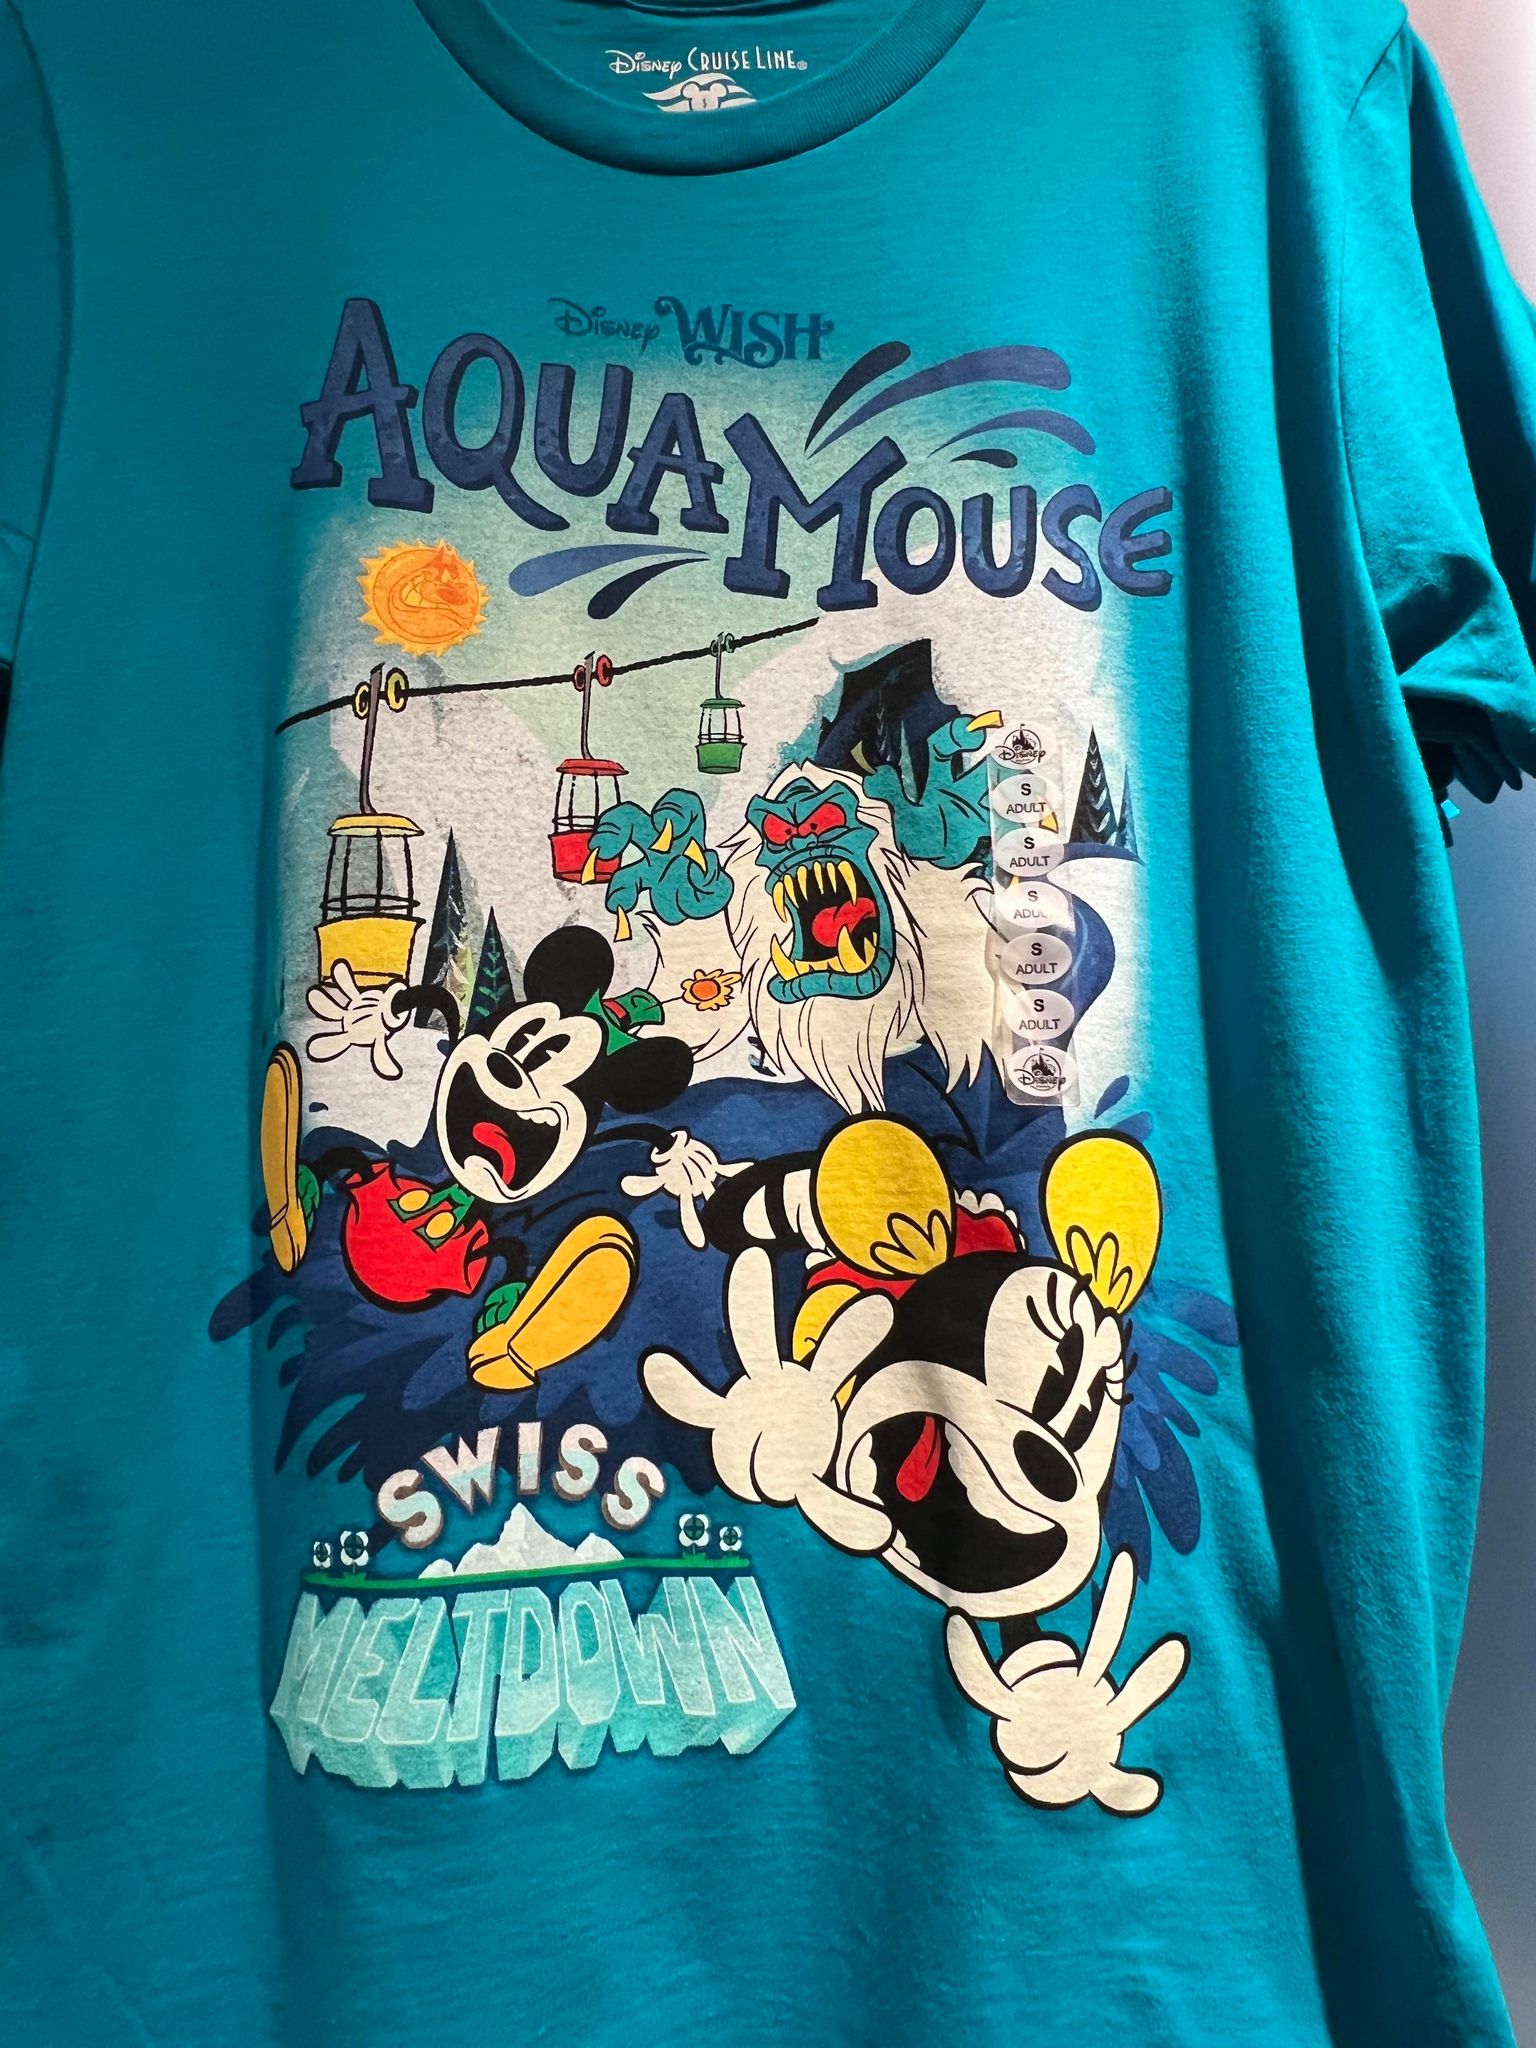 Disney Wish AquaMouse t-shirt up close